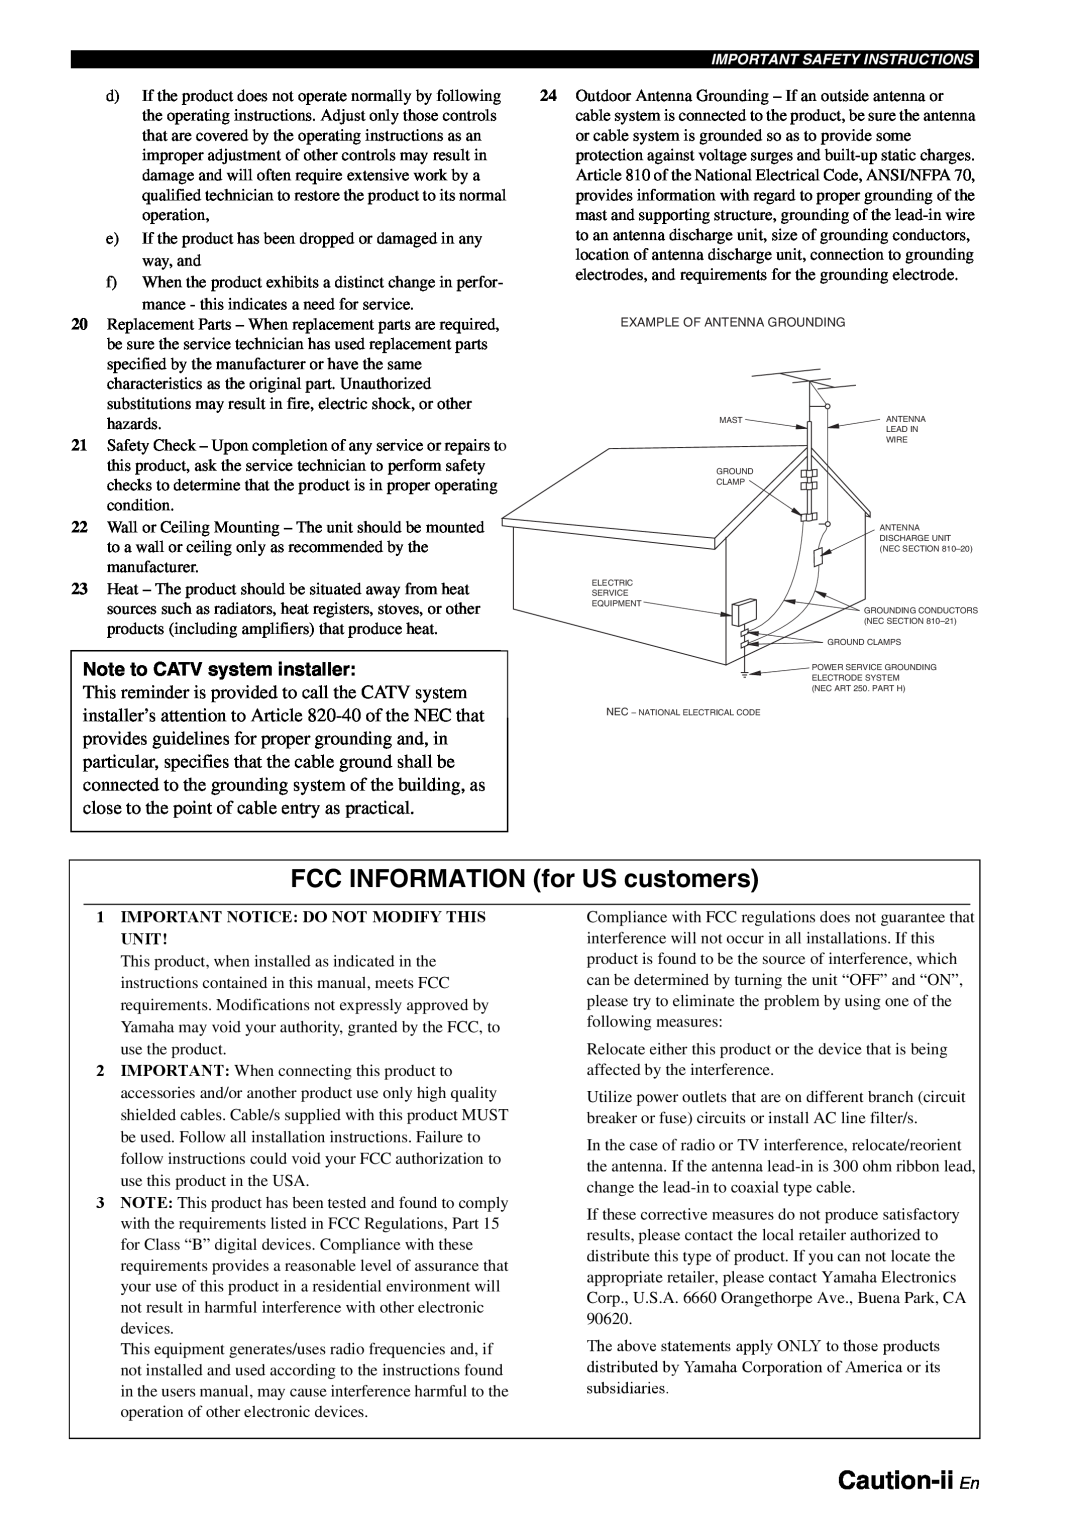 Yamaha RX-V863 owner manual FCC INFORMATION for US customers, Caution-ii En, Note to CATV system installer 